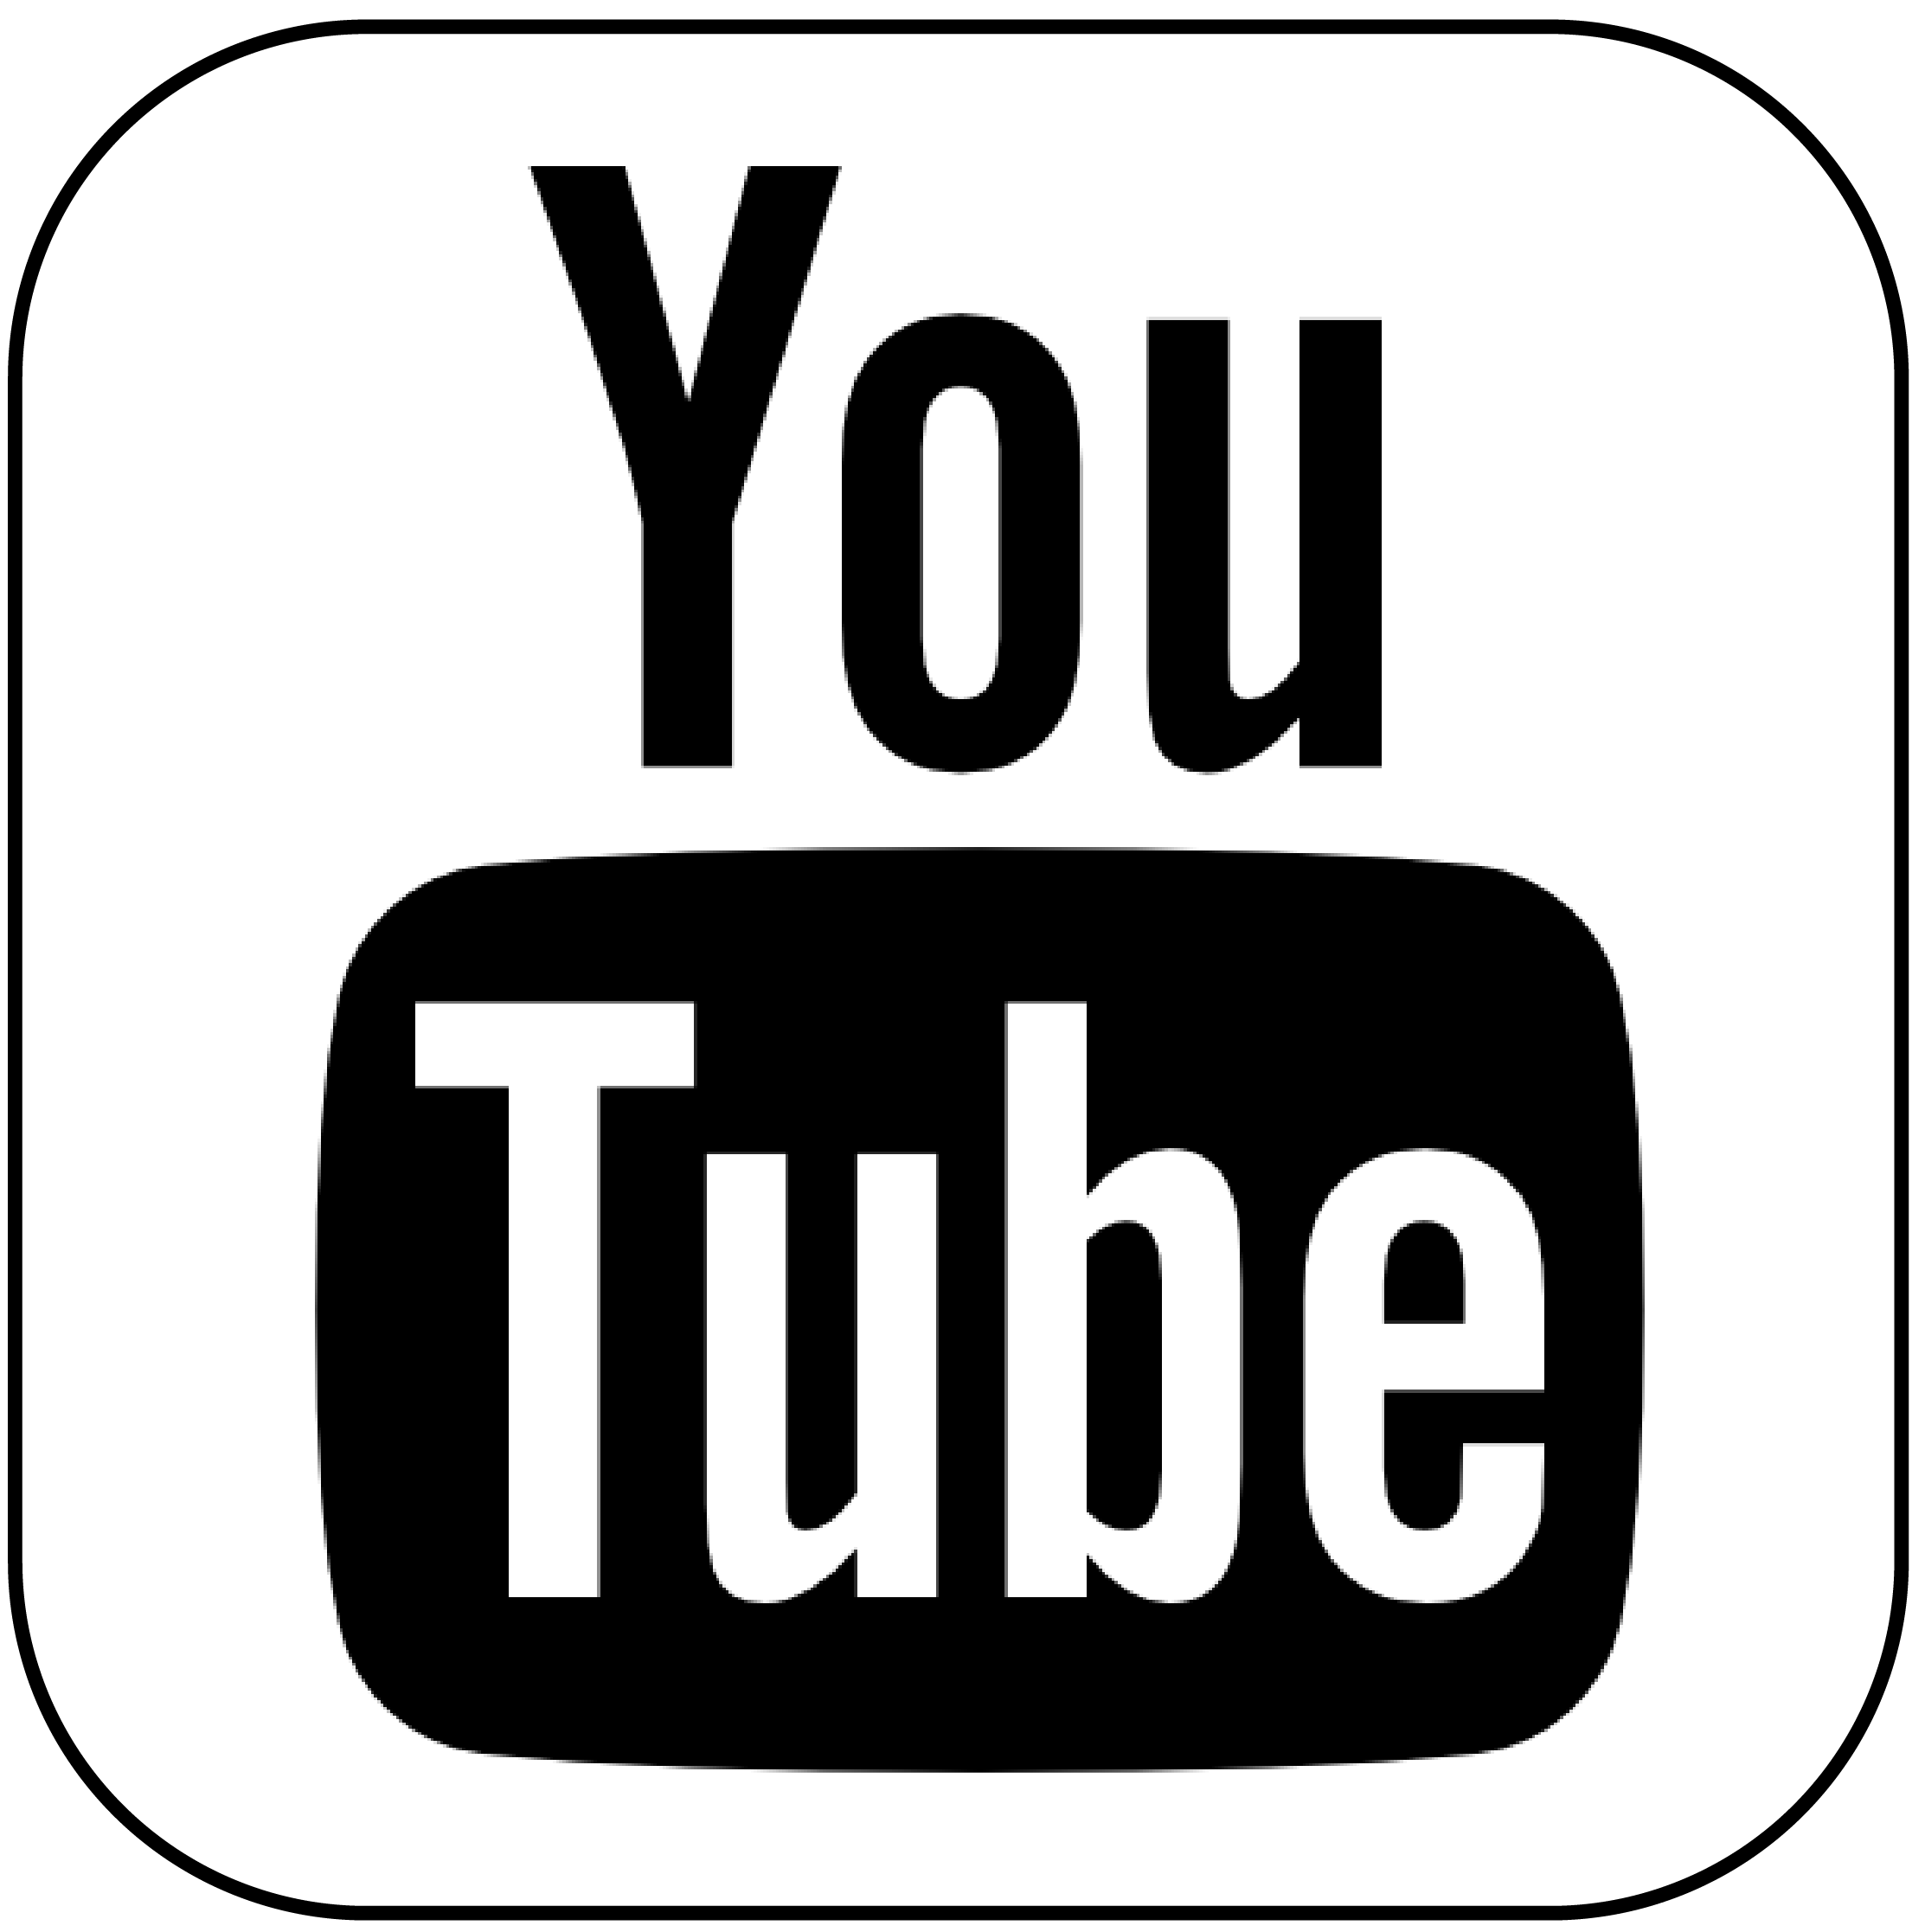 youtube logo ramka 01 01 01